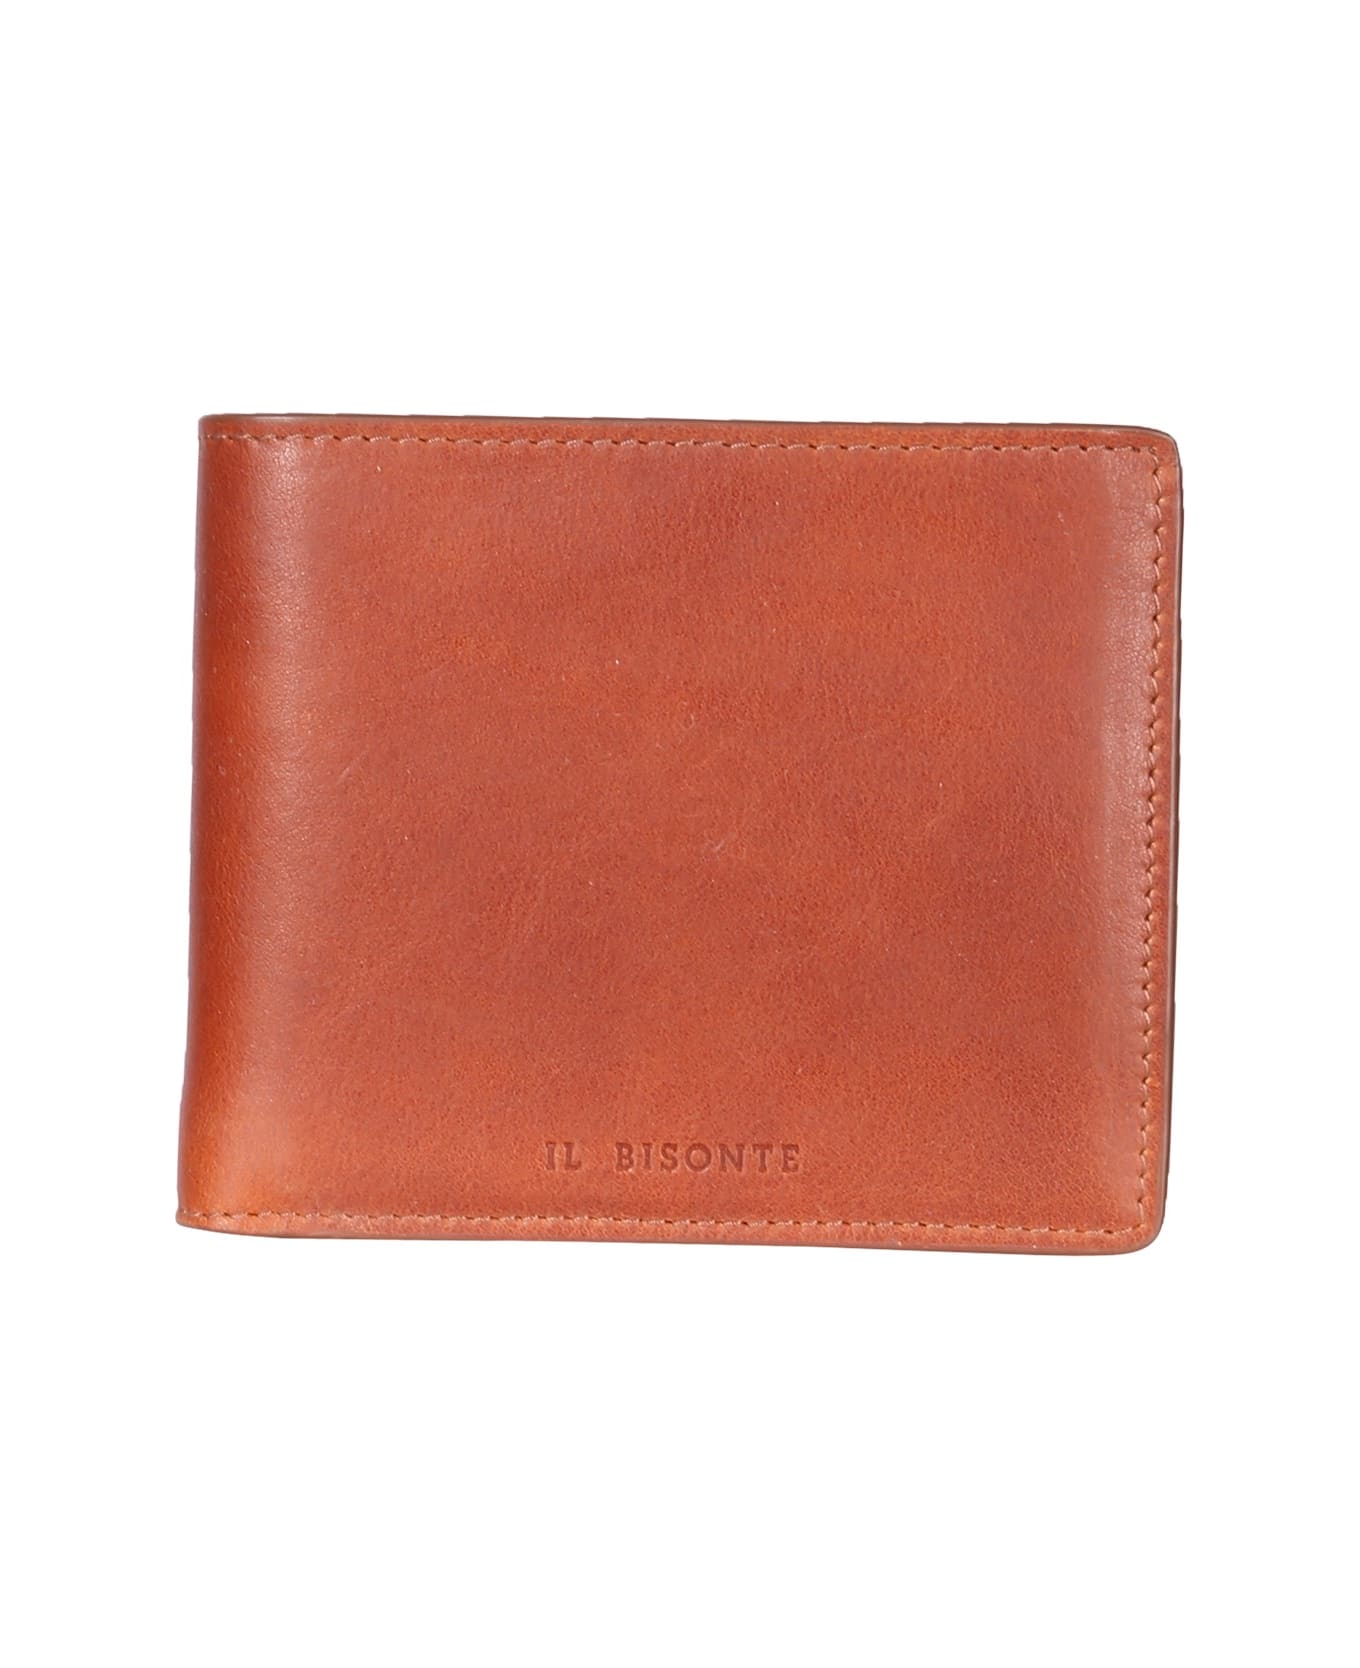 Il Bisonte Leather Bifold Wallet - MARRONE